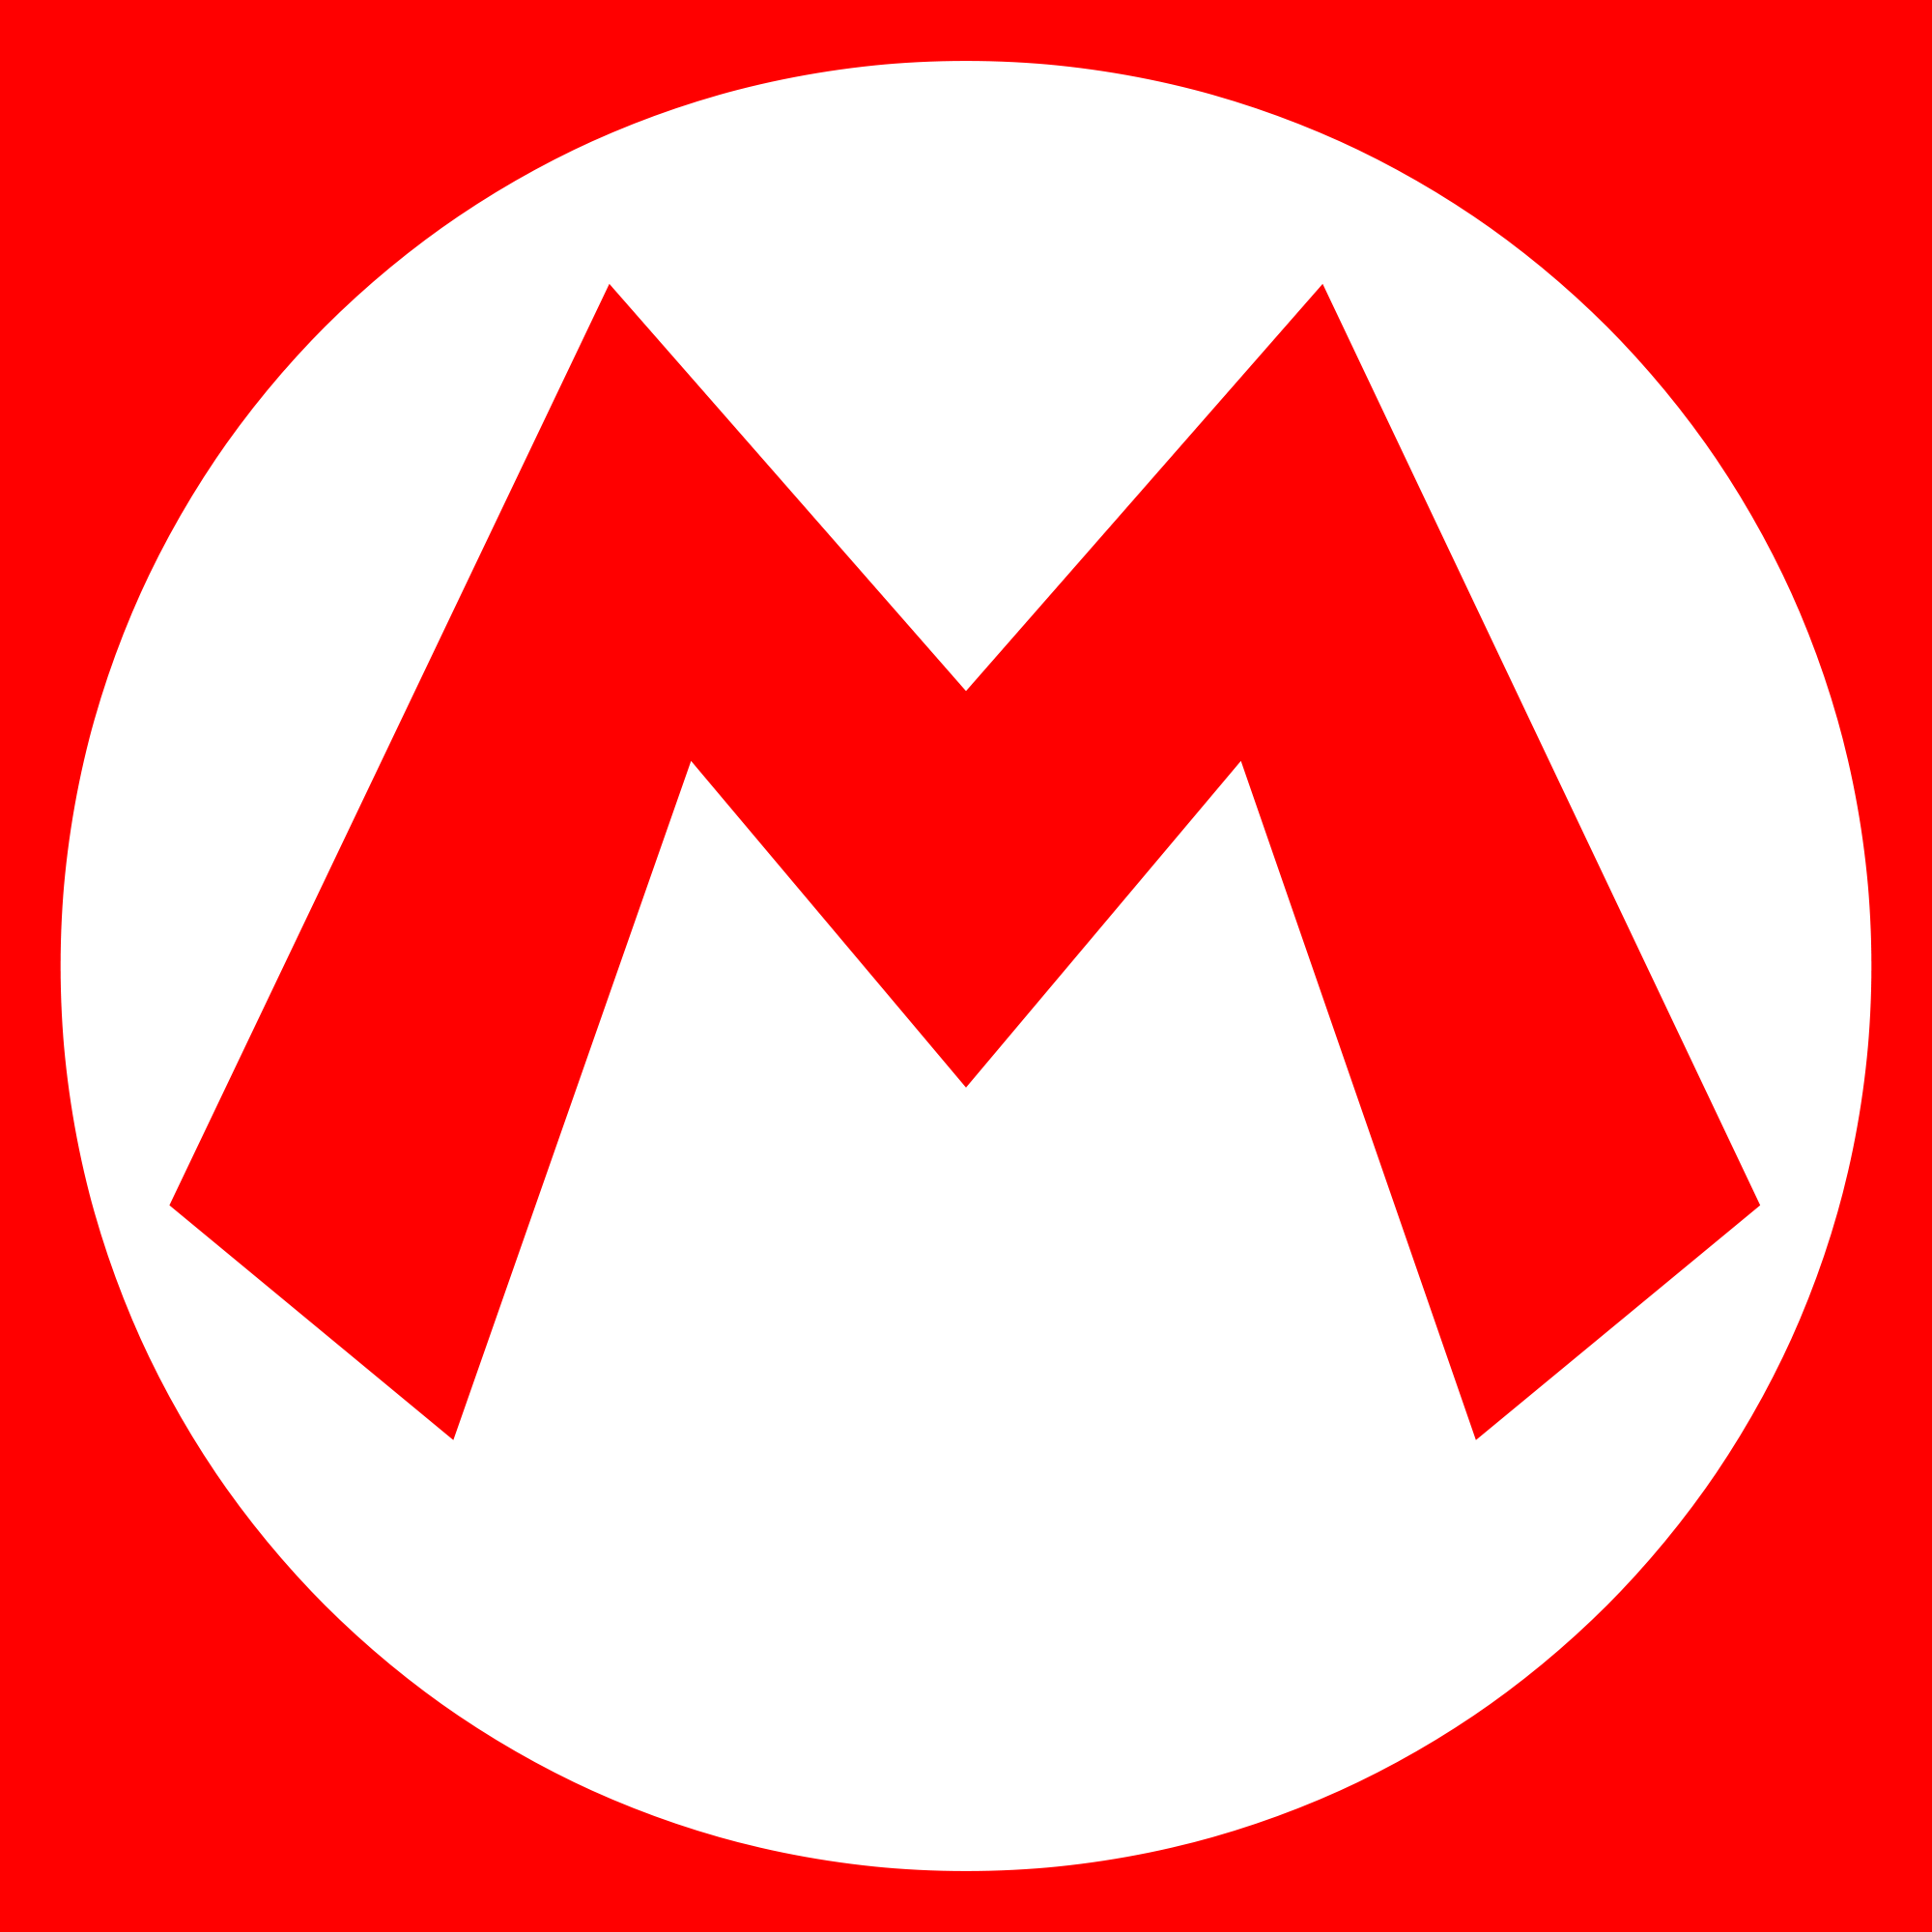 Mario and Luigi Logo - Mario (franchise)